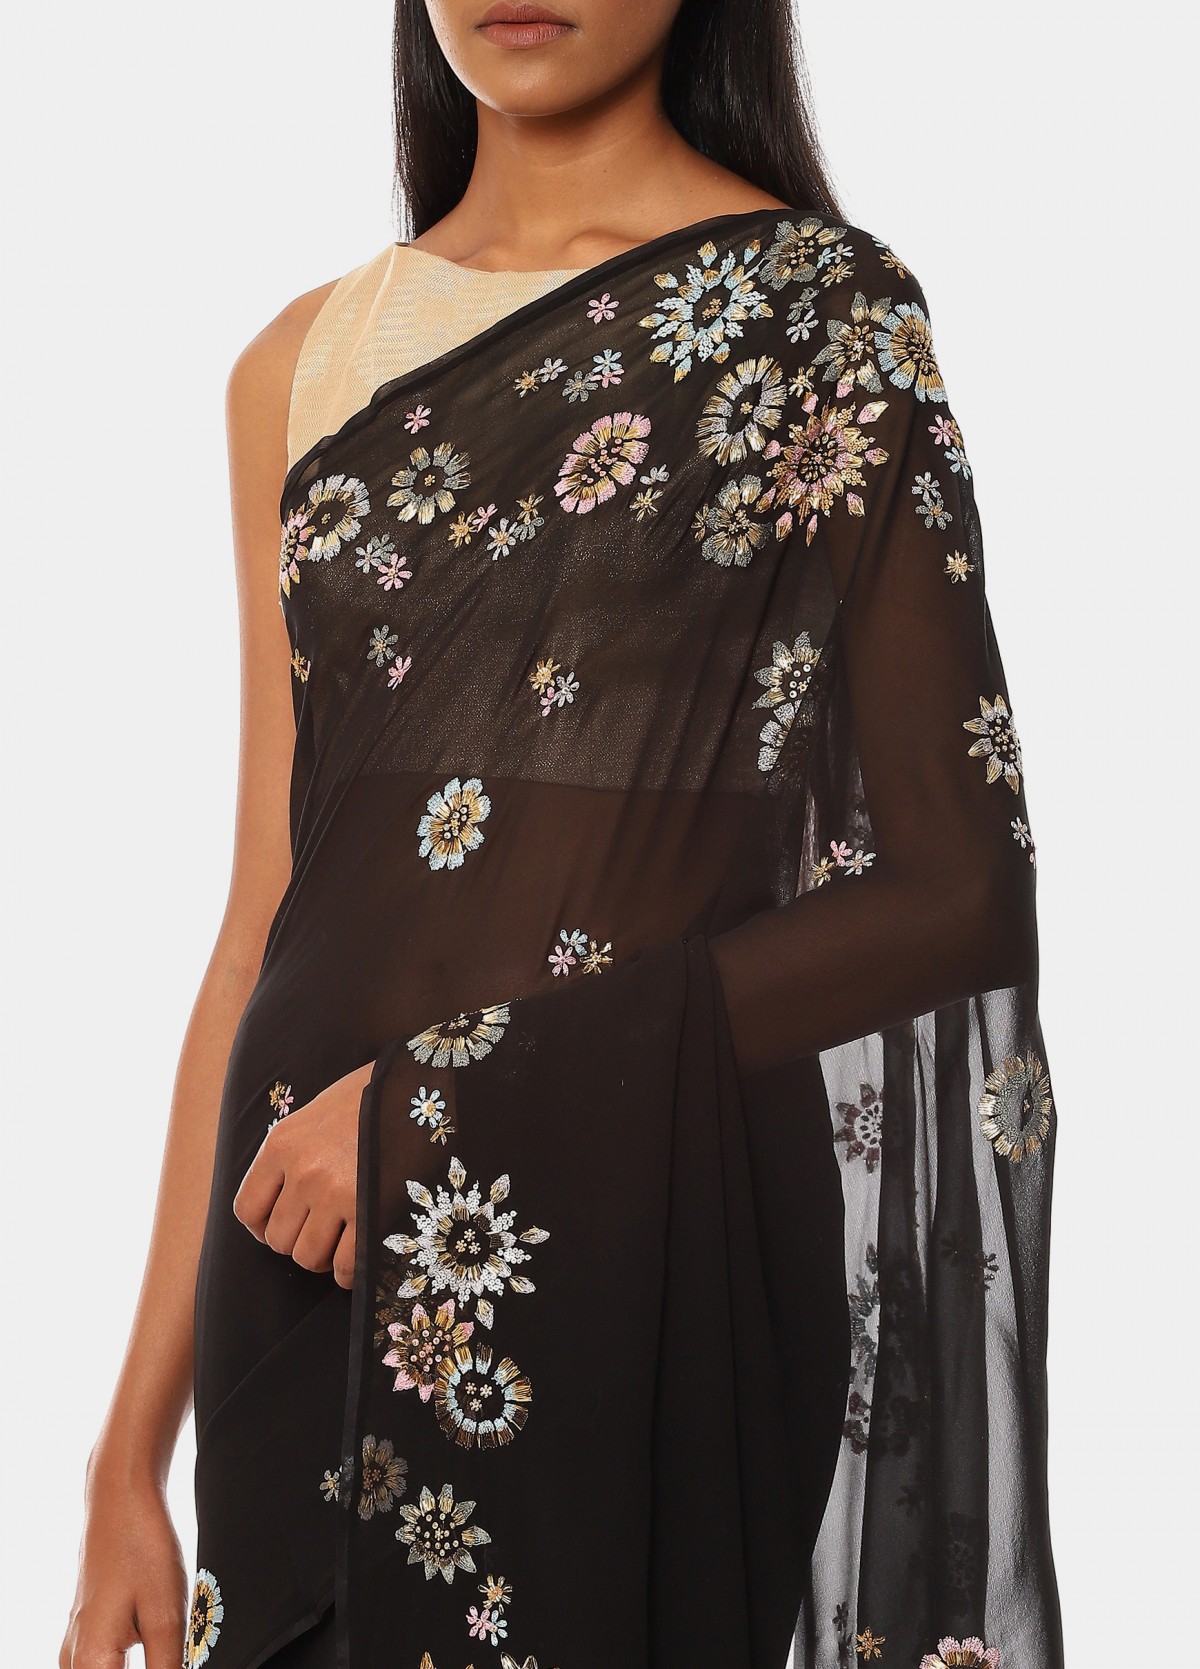 The Embroidered Gala Sari